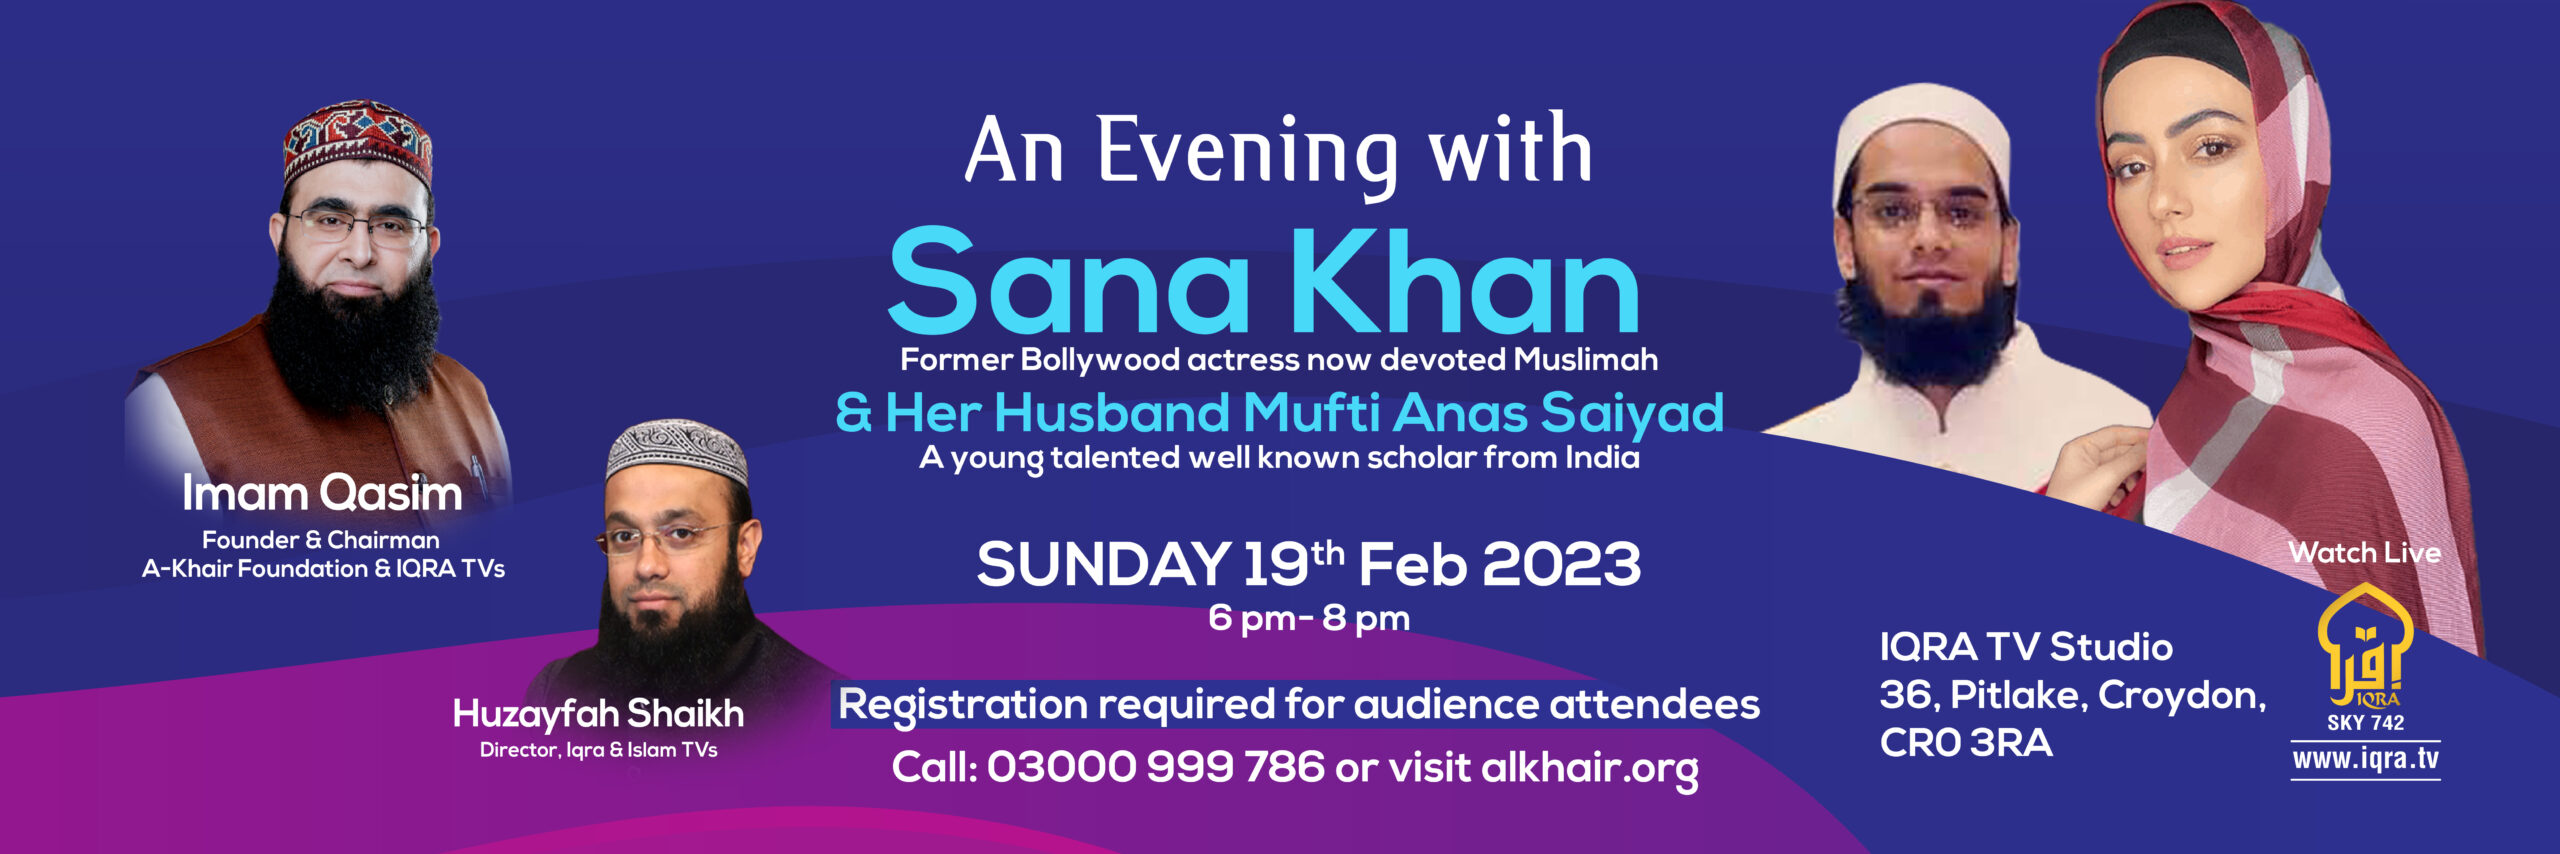 Sana Khan Web banner-01-01